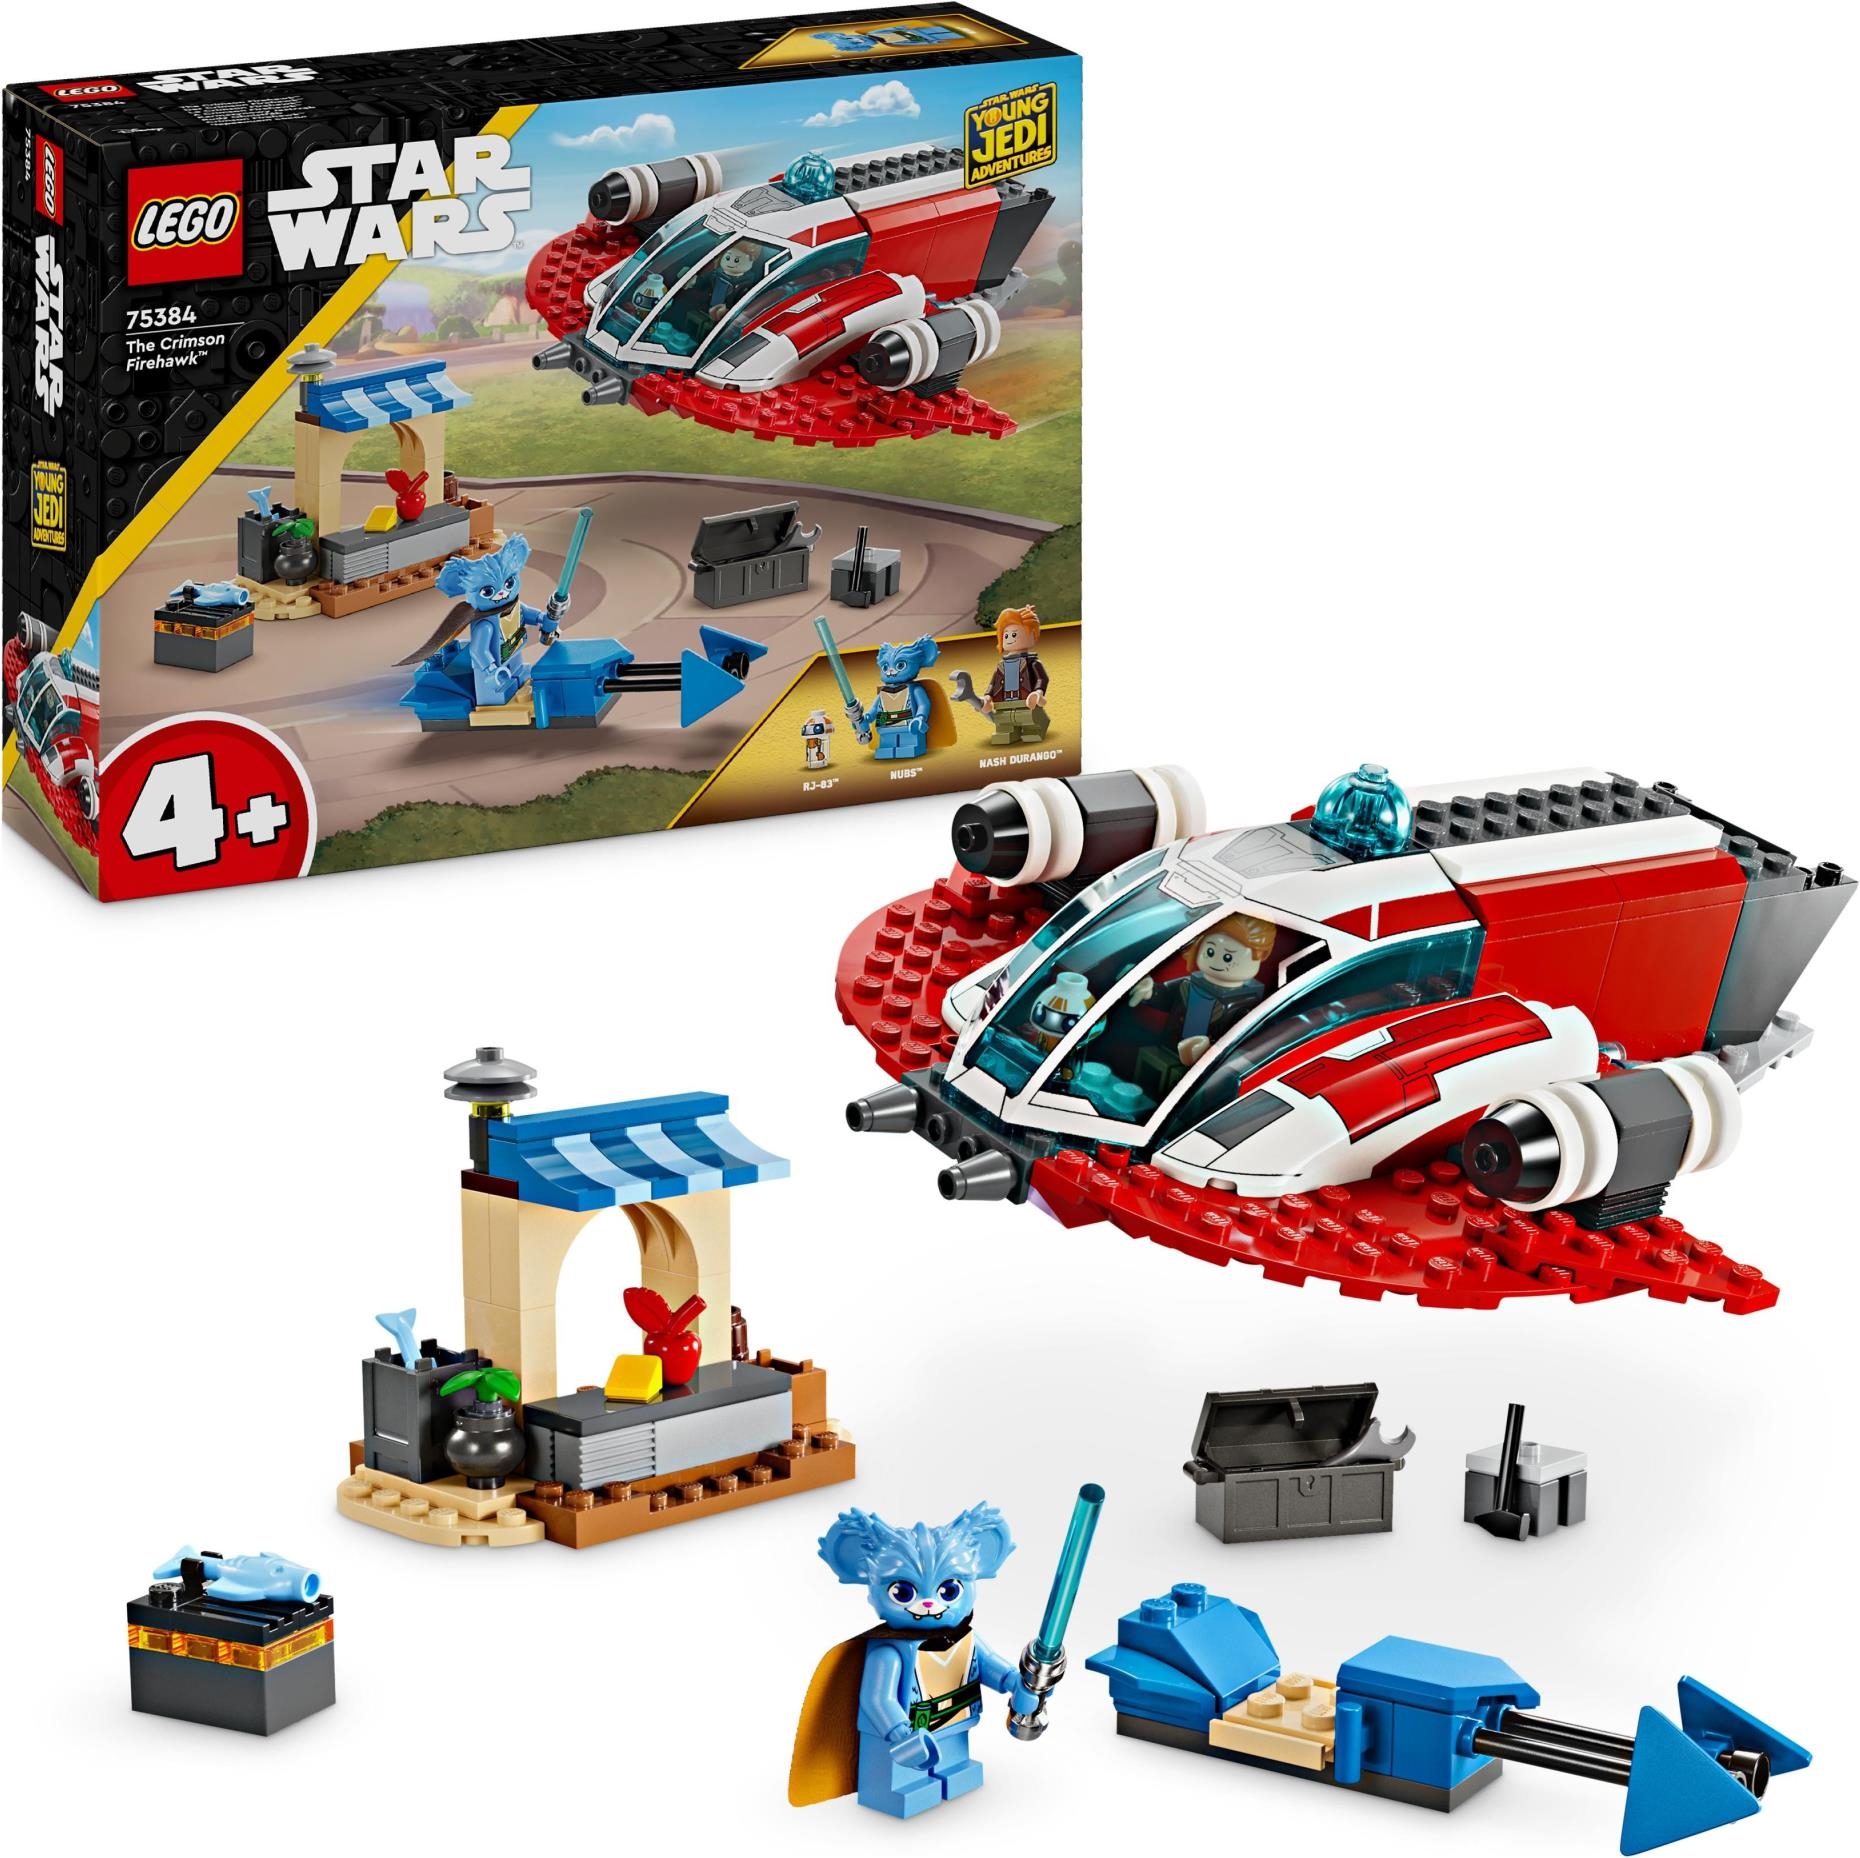 Star Wars: Lego 75384 - The Crimson Firehawk